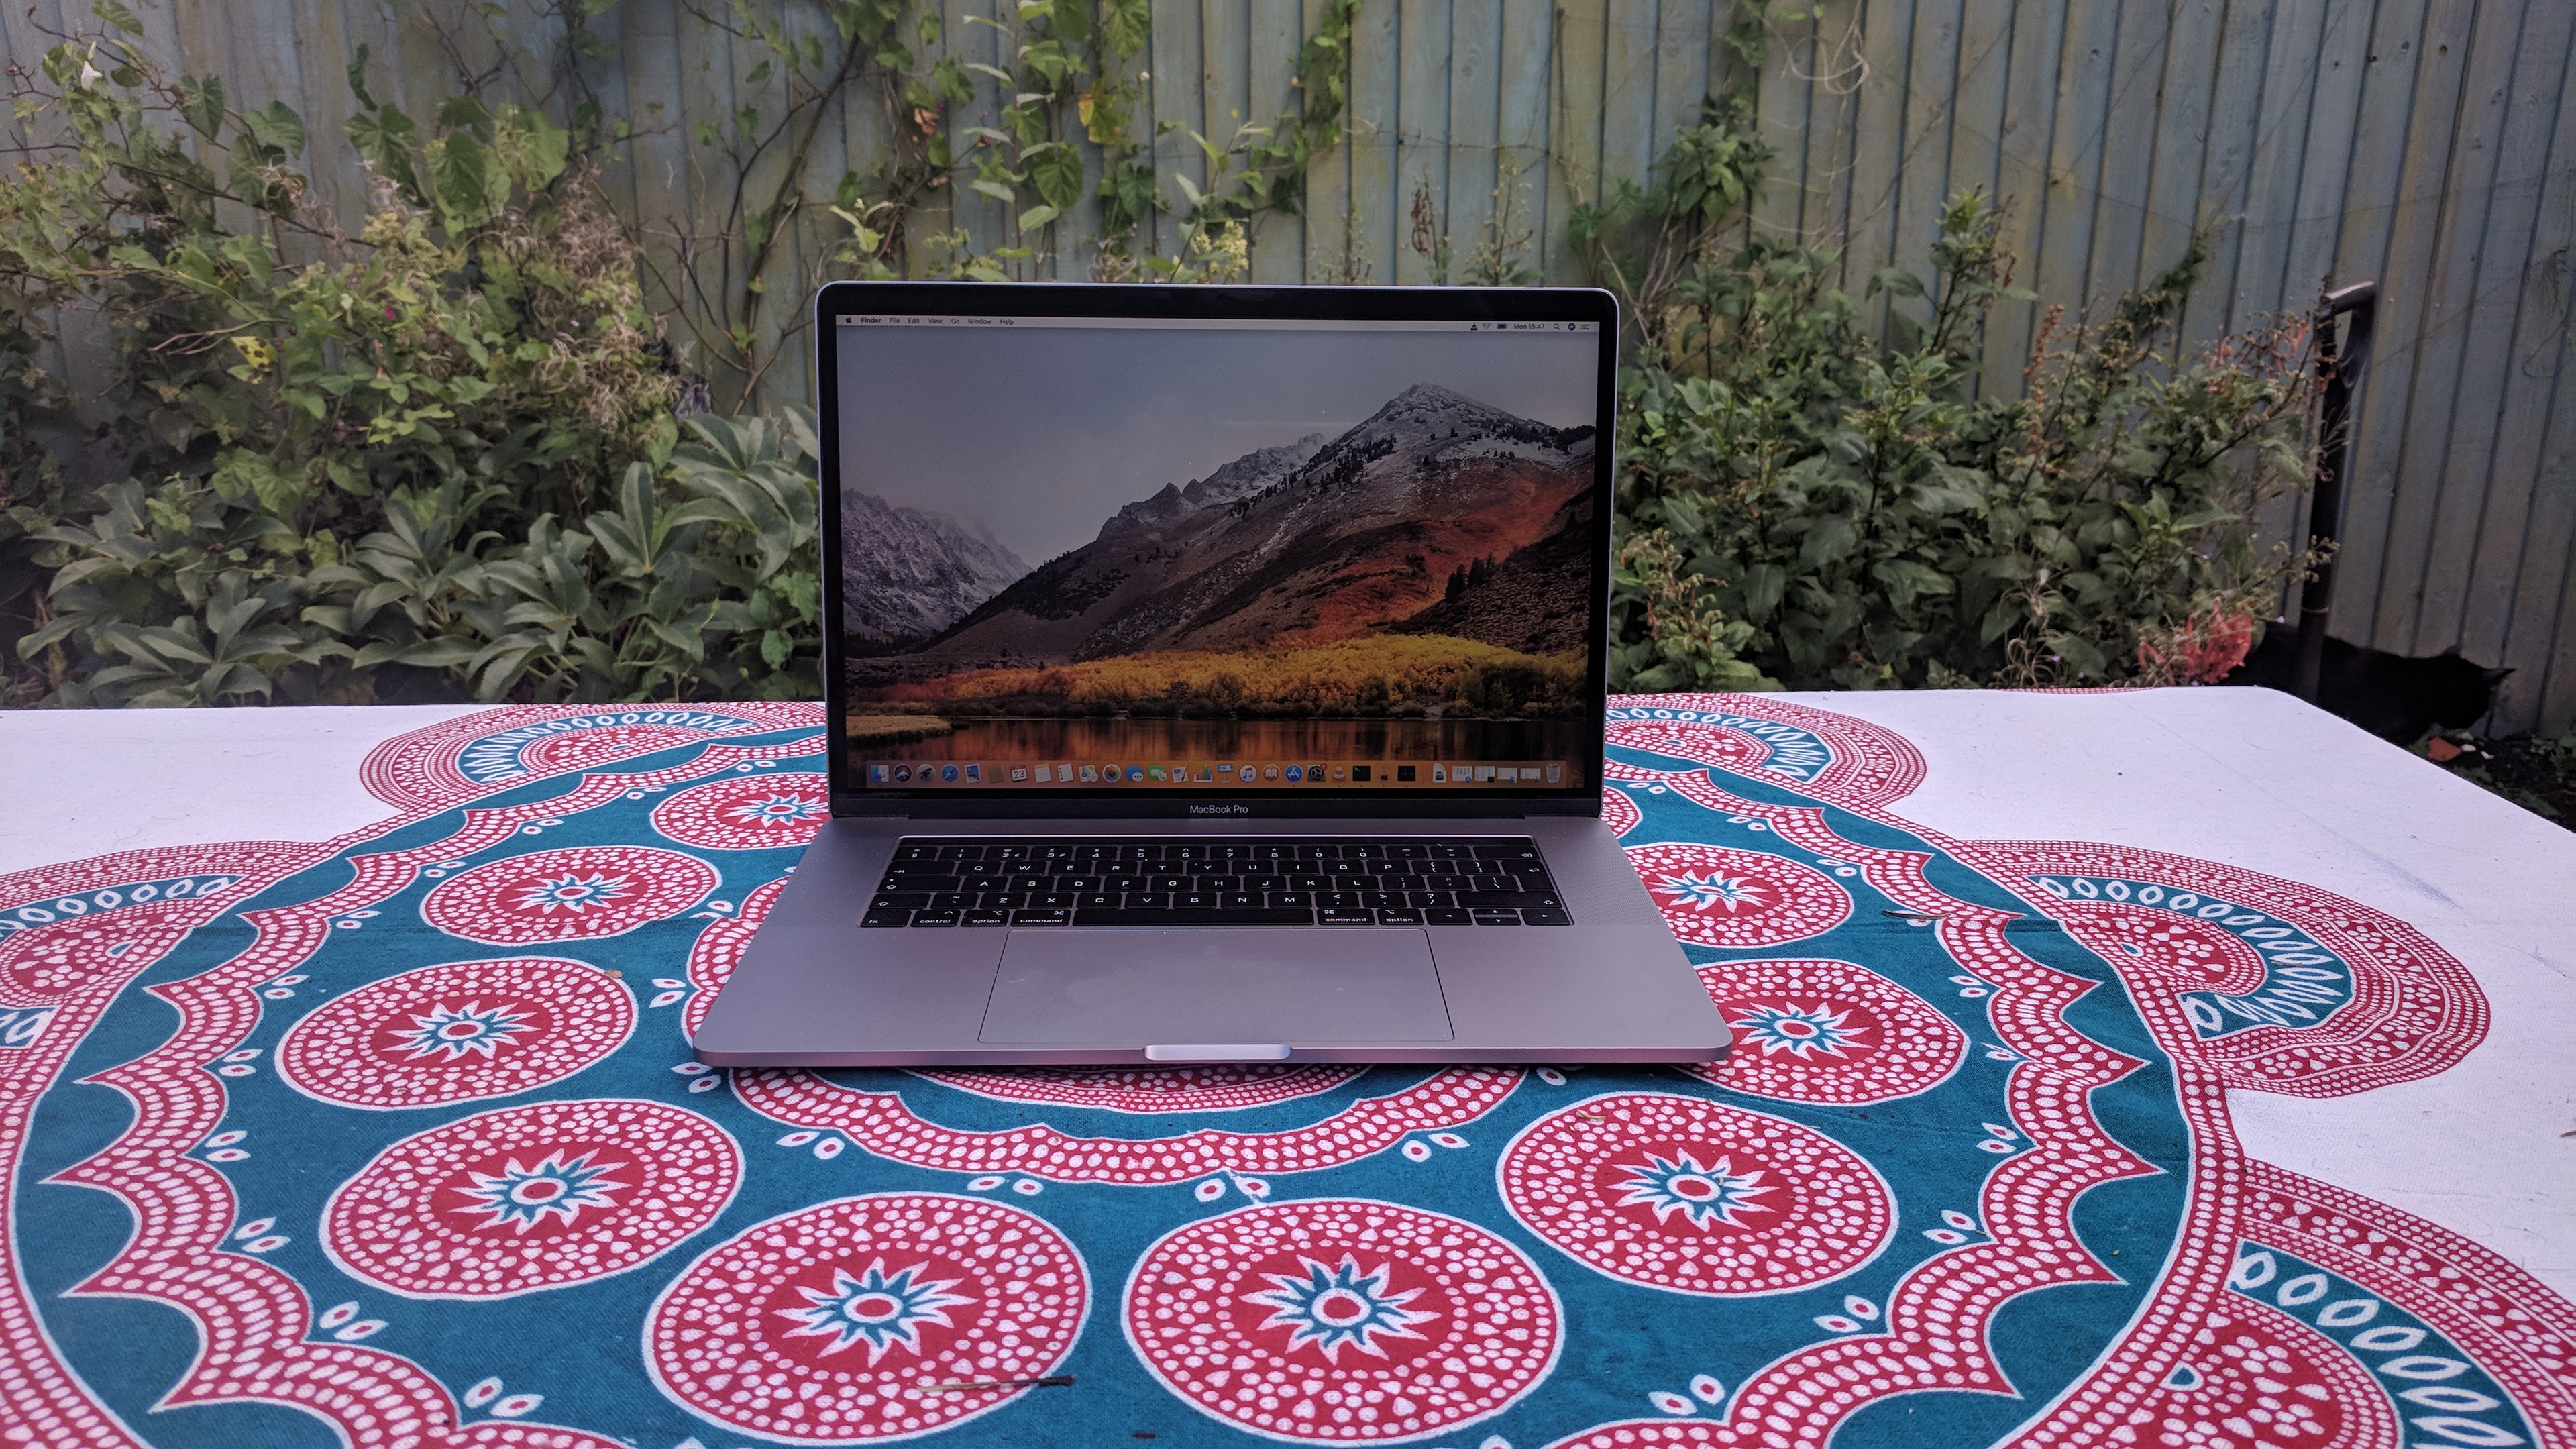 MacBook Pro (15-inch, Mid-2018)